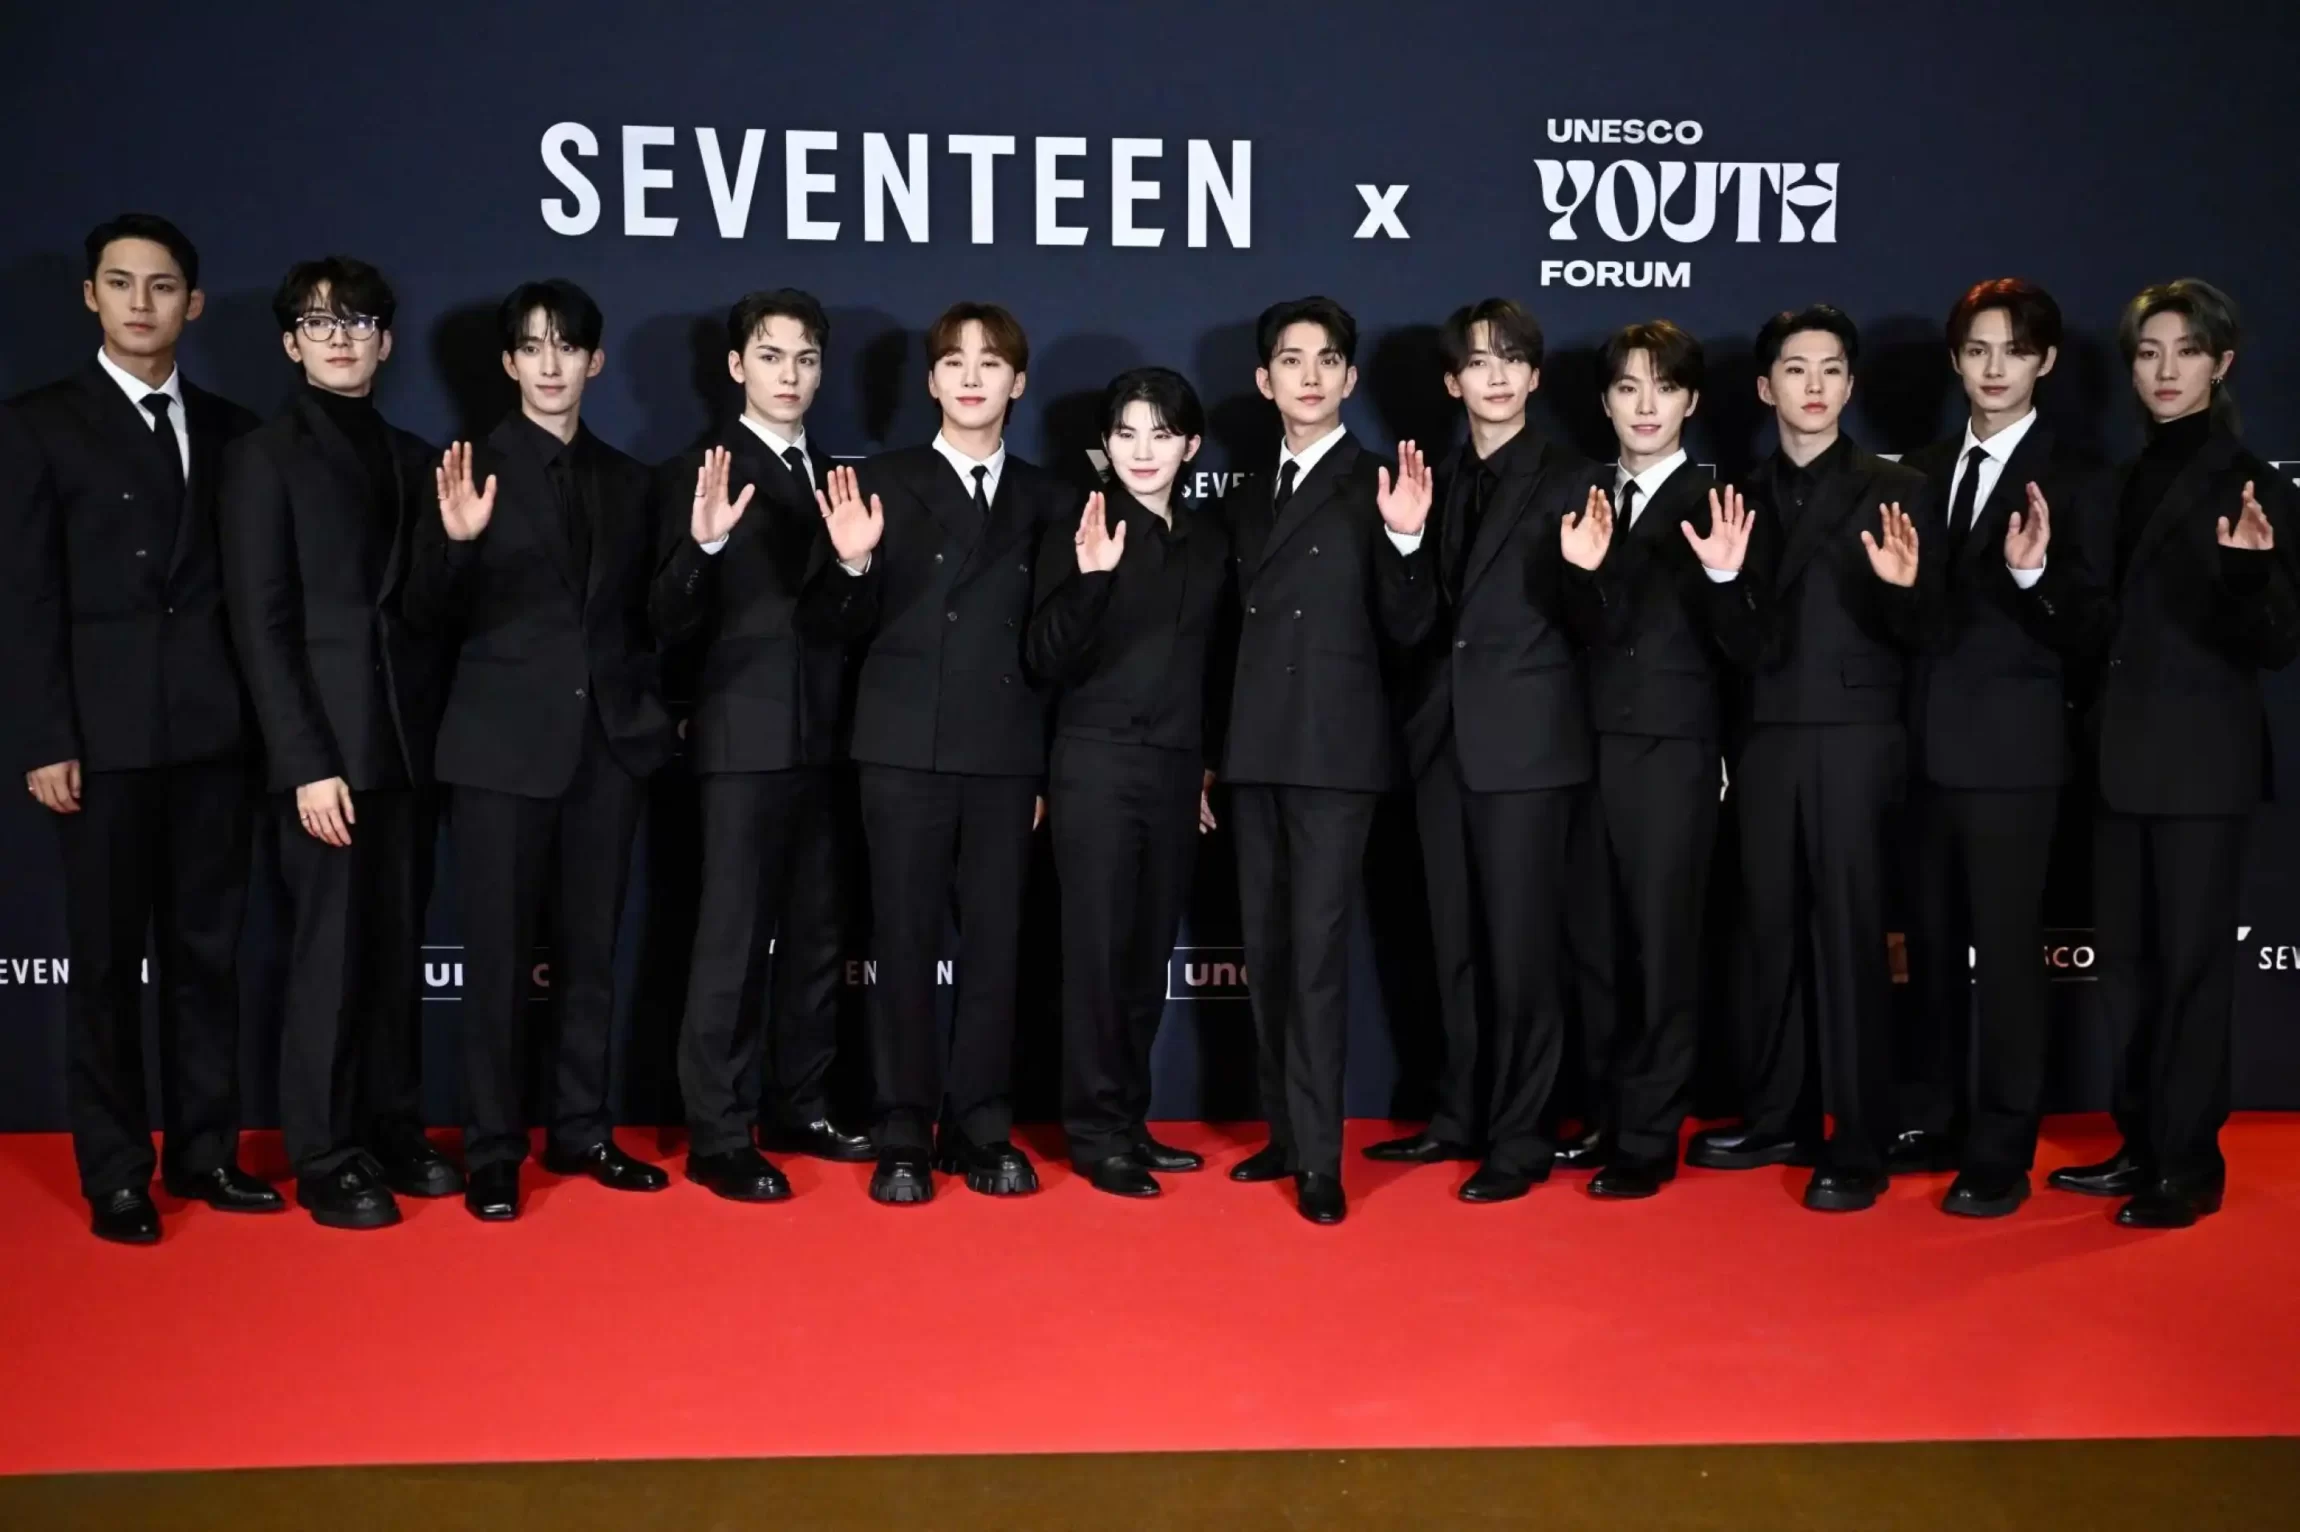 Seventeen Members: S.Coups, Jeonghan, Joshua, Jun, Hoshi, Wonwoo, Woozi, DK, Mingyu, The8, Seungkwan, Vernon, and Dino